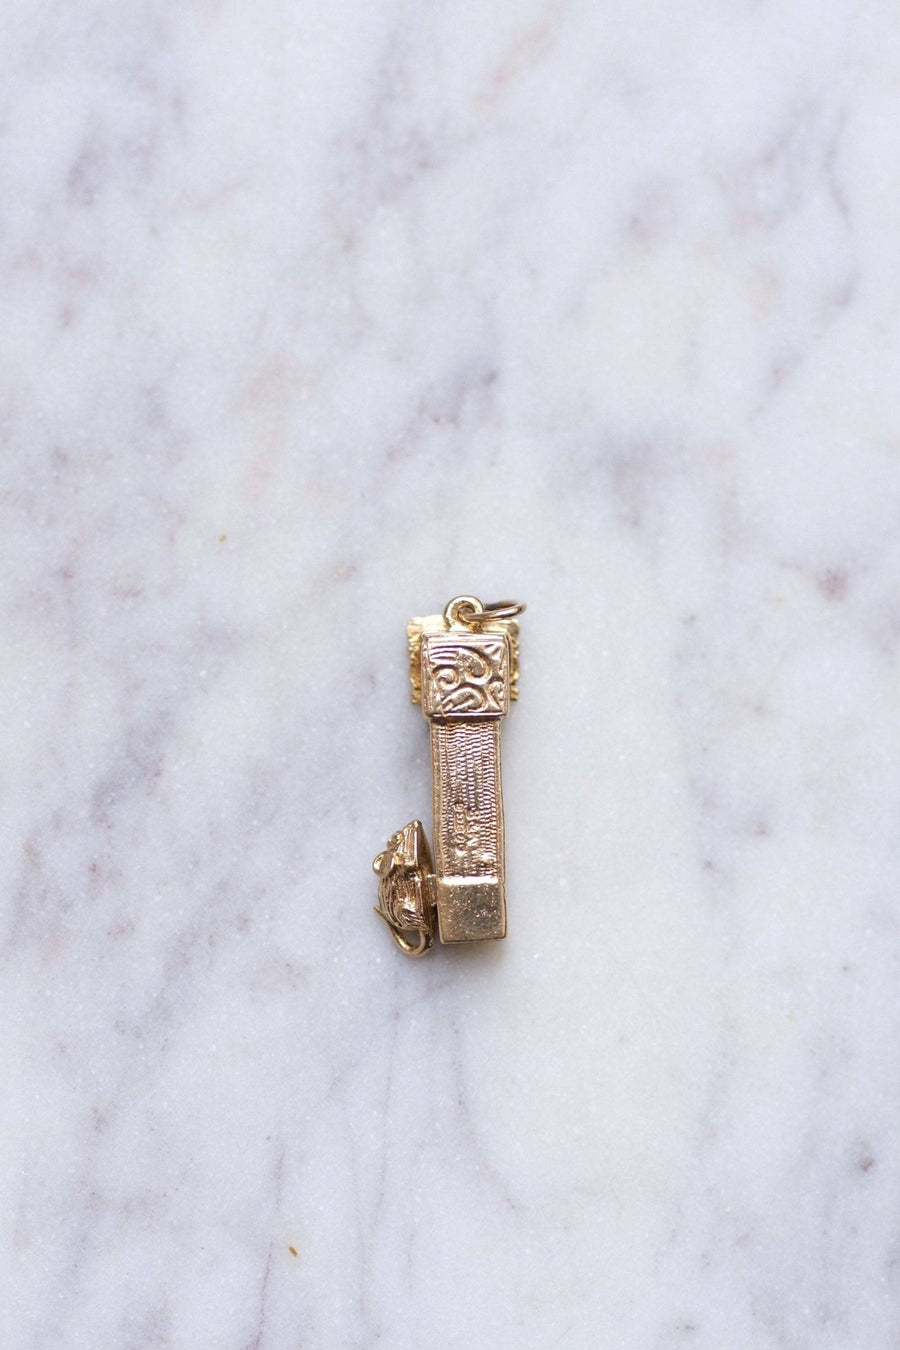 Charming vintage gold clock and mouse pendant - Galerie Pénélope